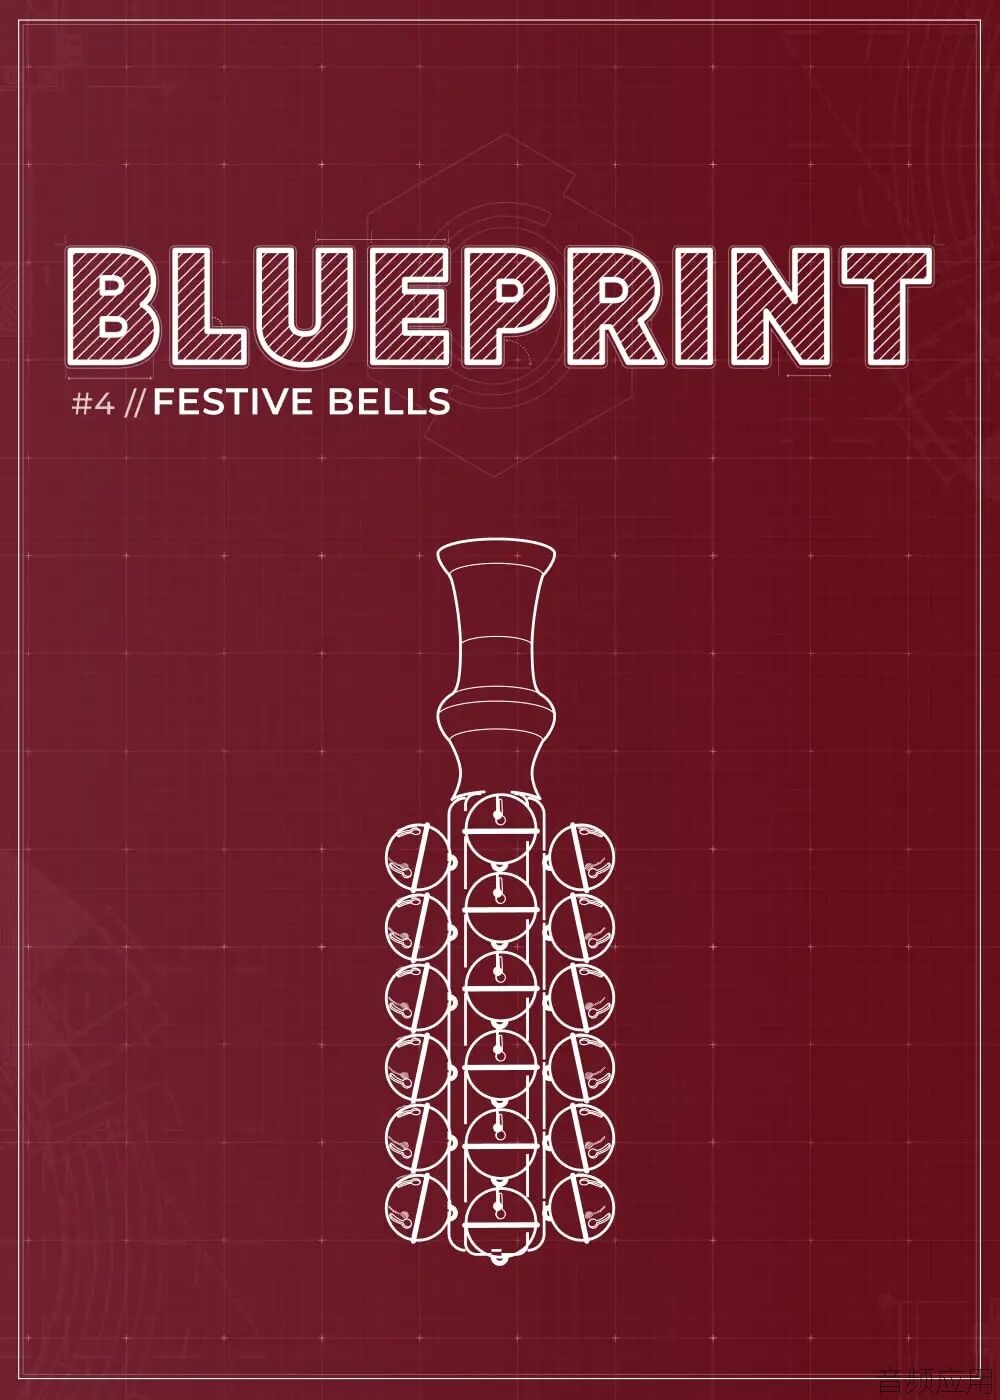 fracture-sounds-blueprint-festive-bells-poster.webp.jpg